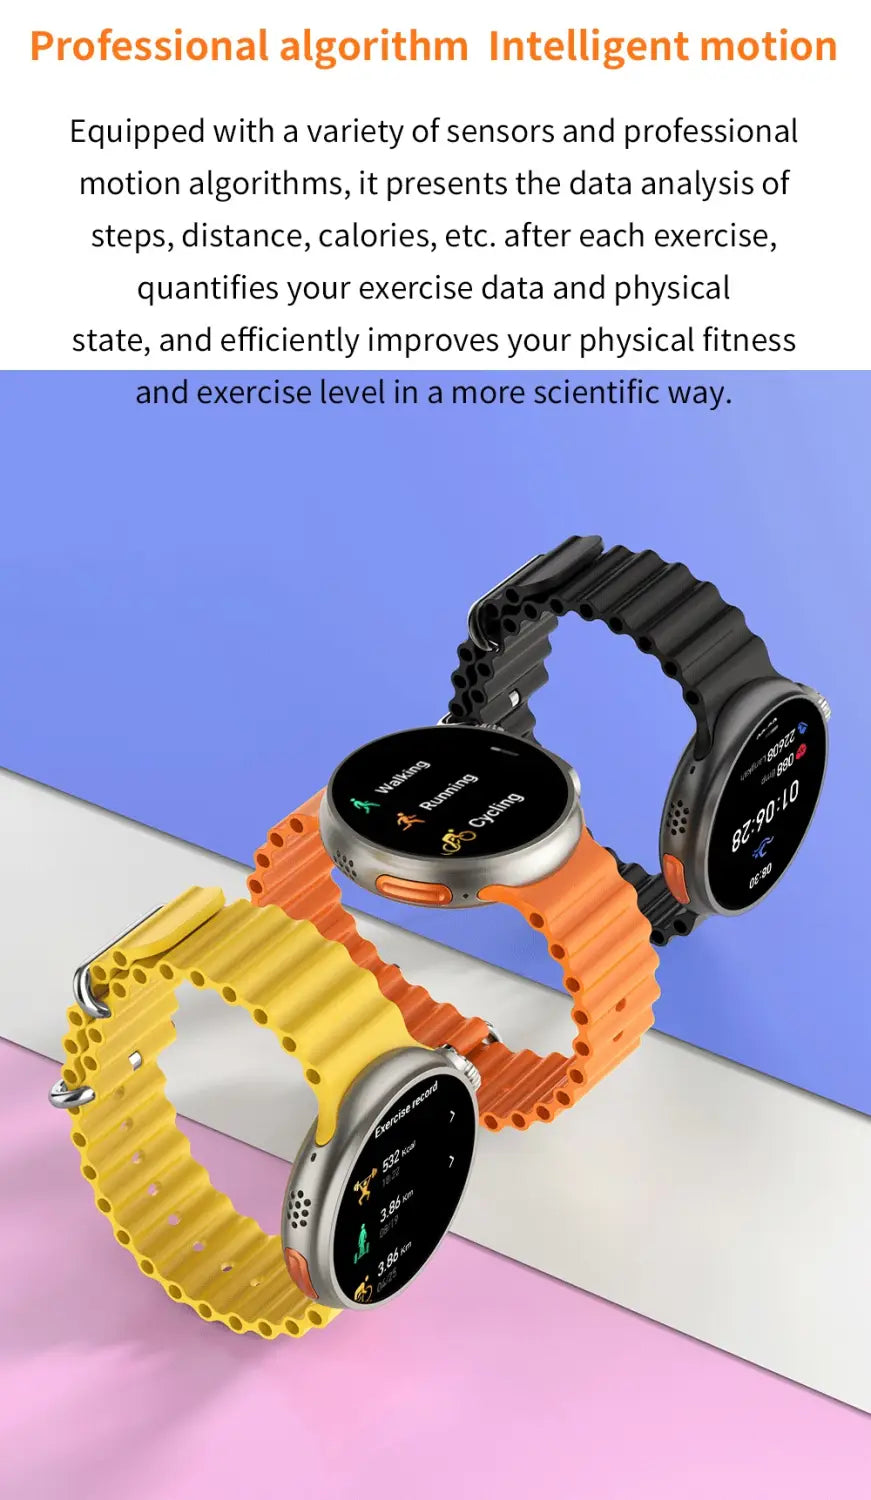 SyncTech Smart Watch